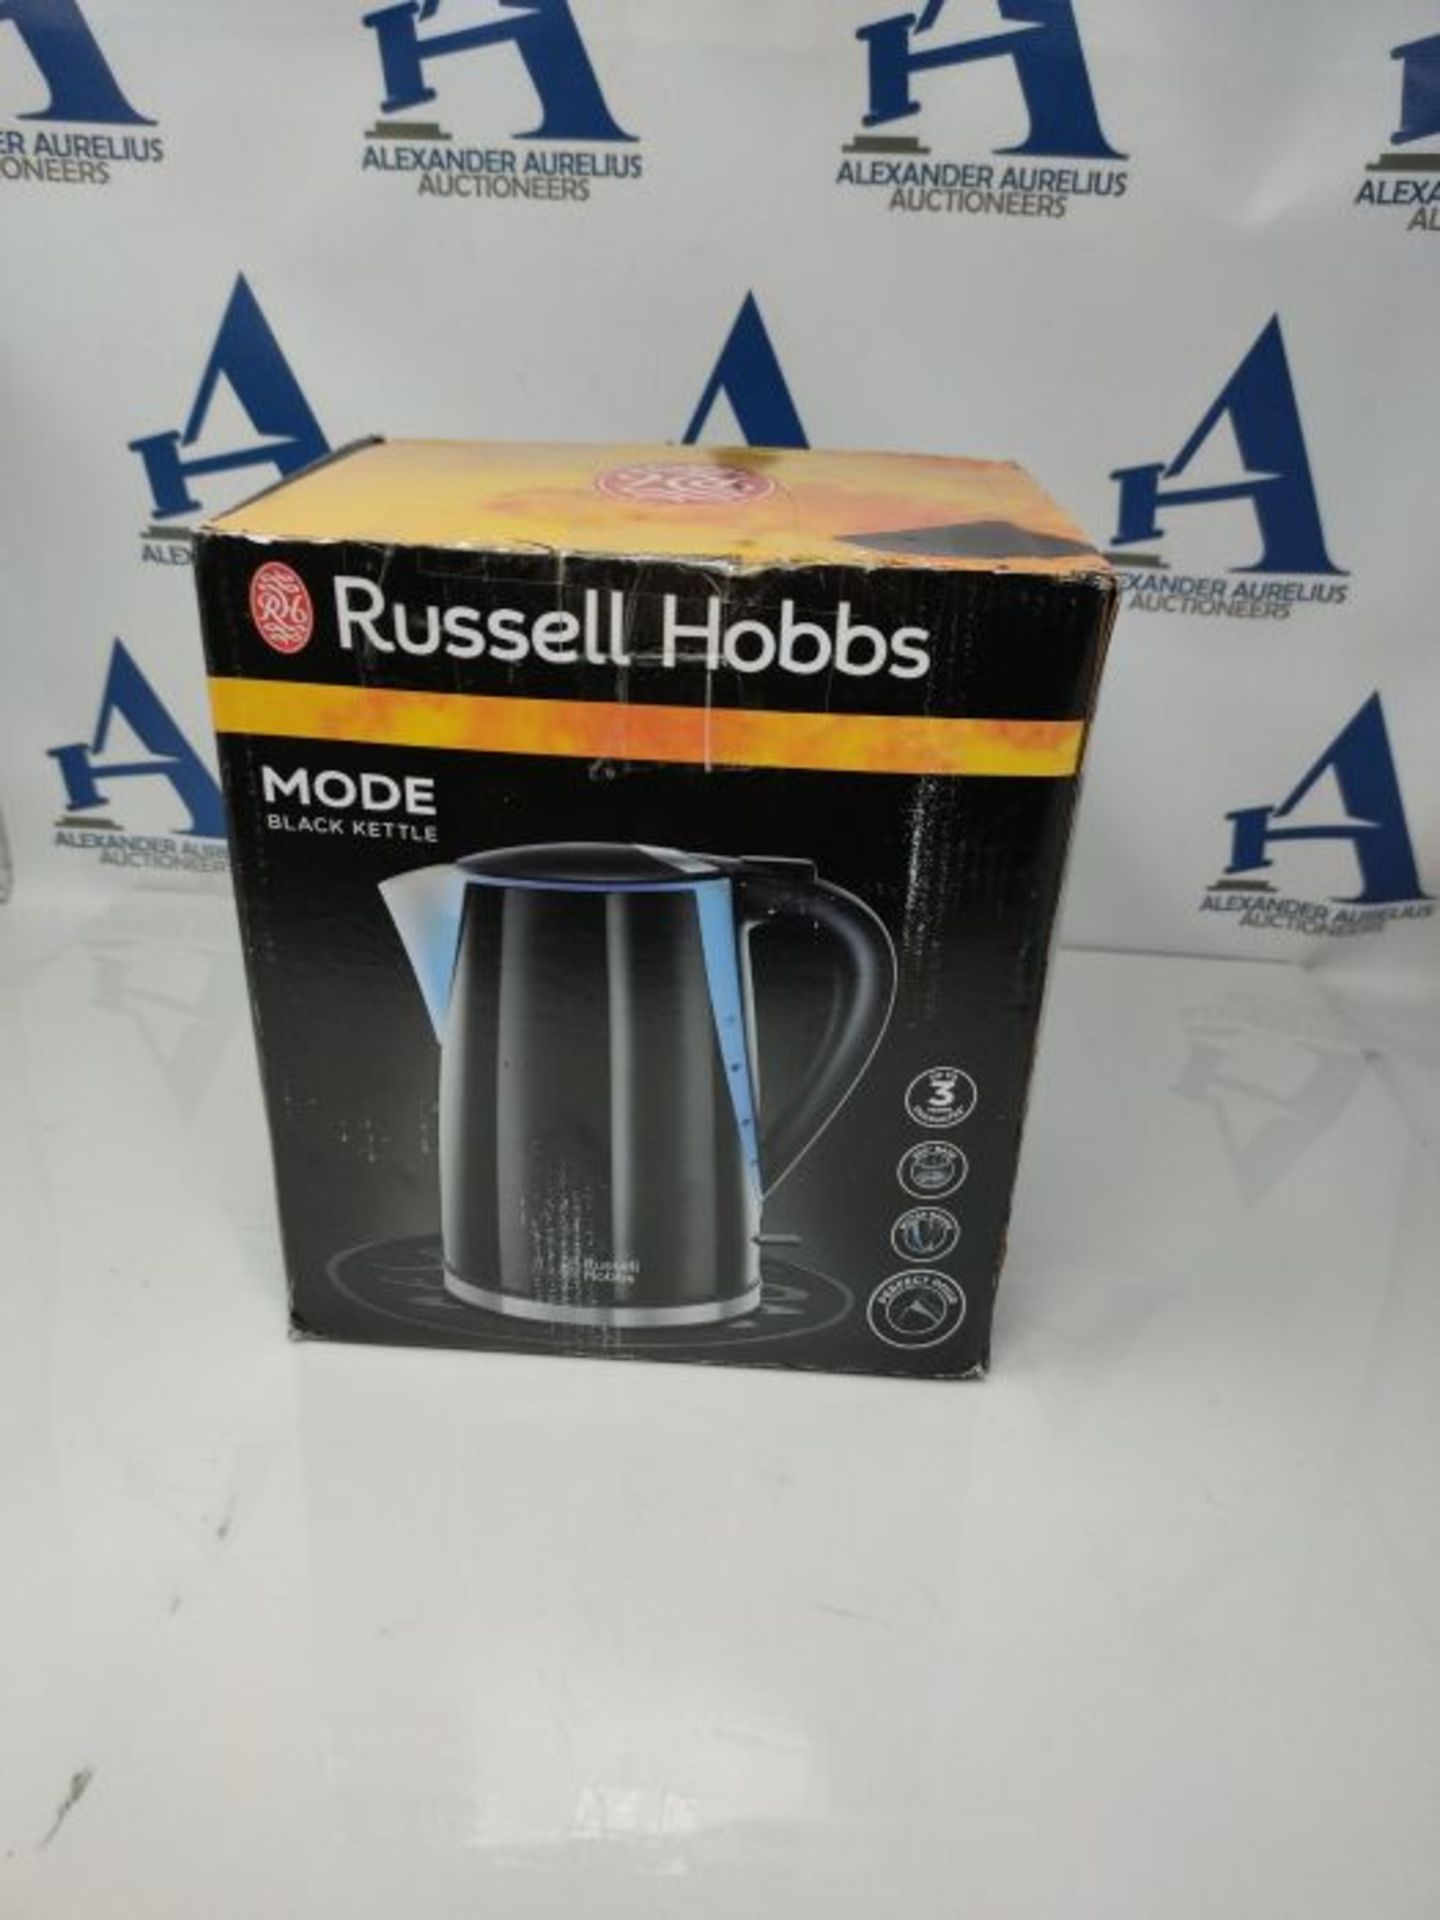 Russell Hobbs Mode Kettle 21400 - Black - Image 2 of 3